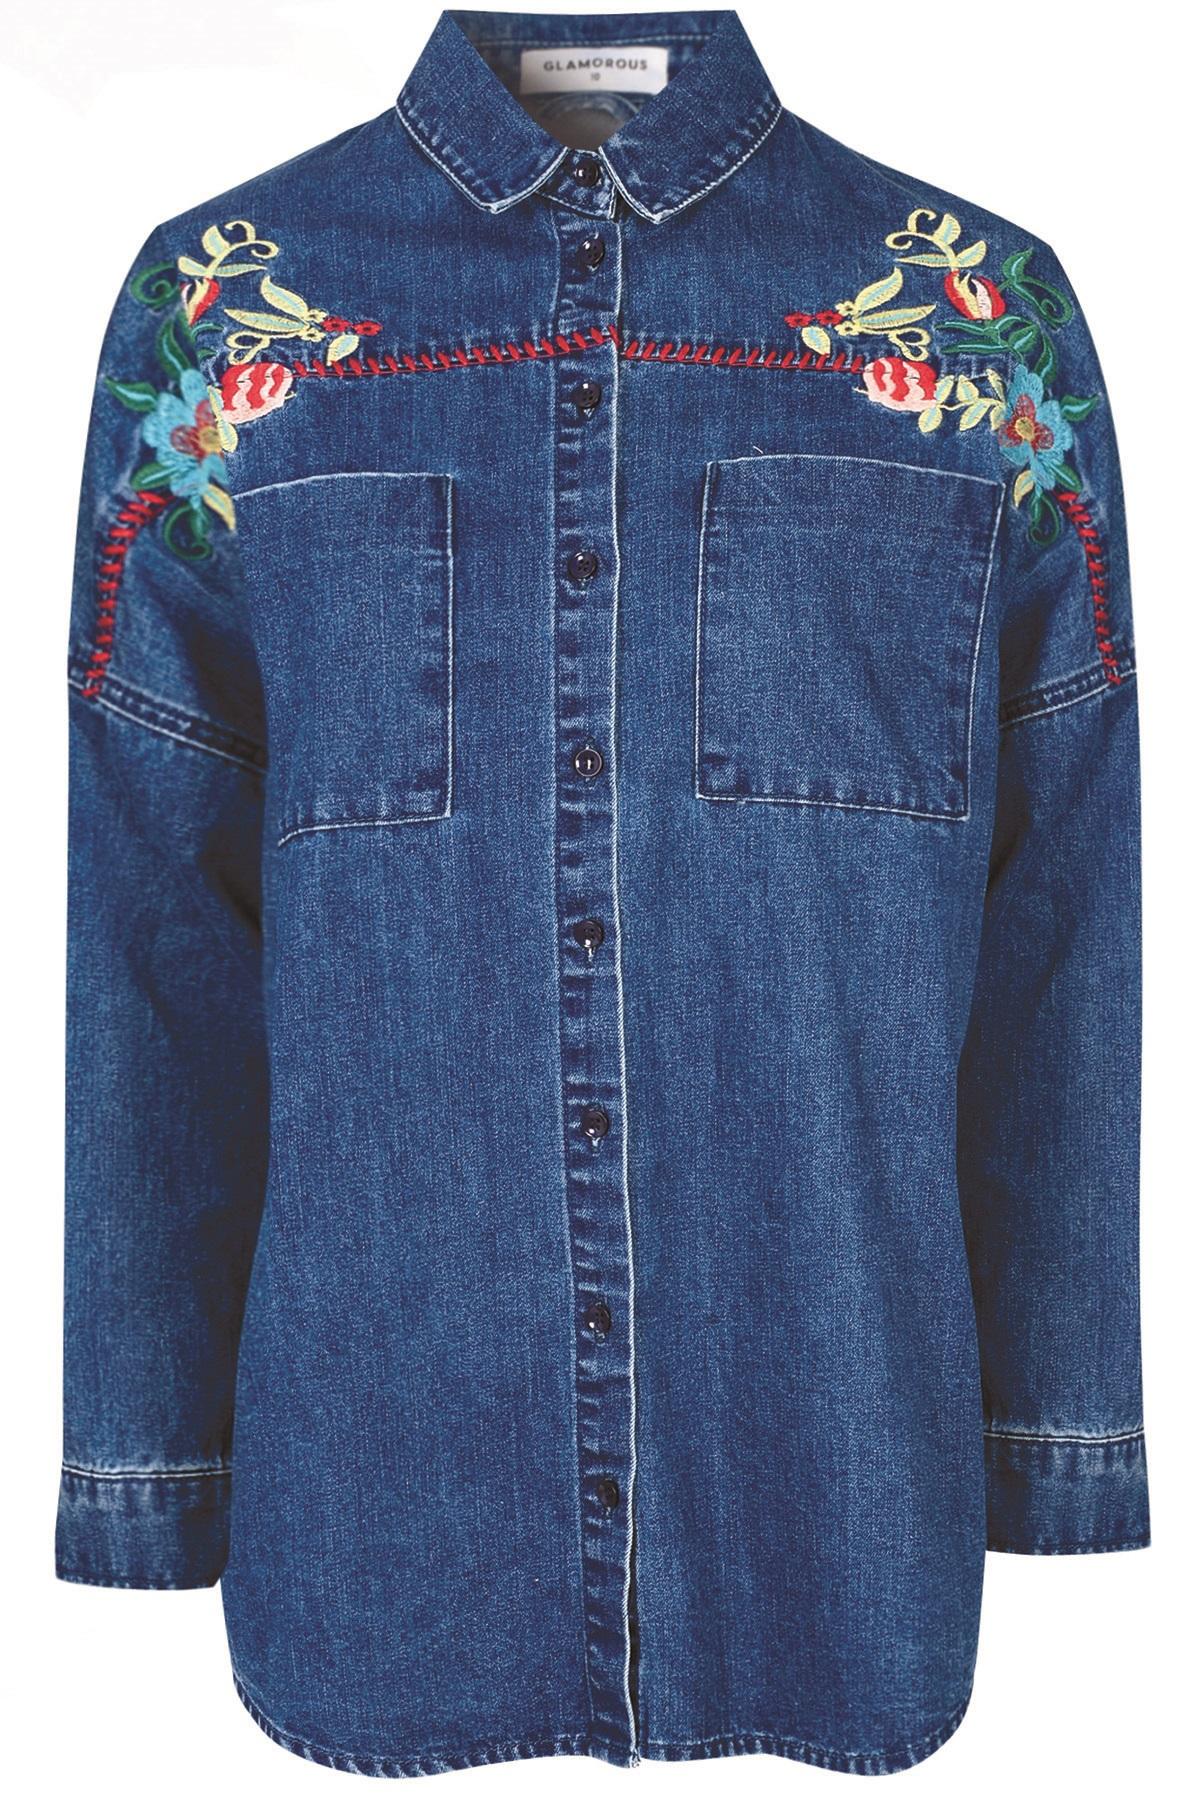 Glamorous, Embroidered Denim Shirt, £39